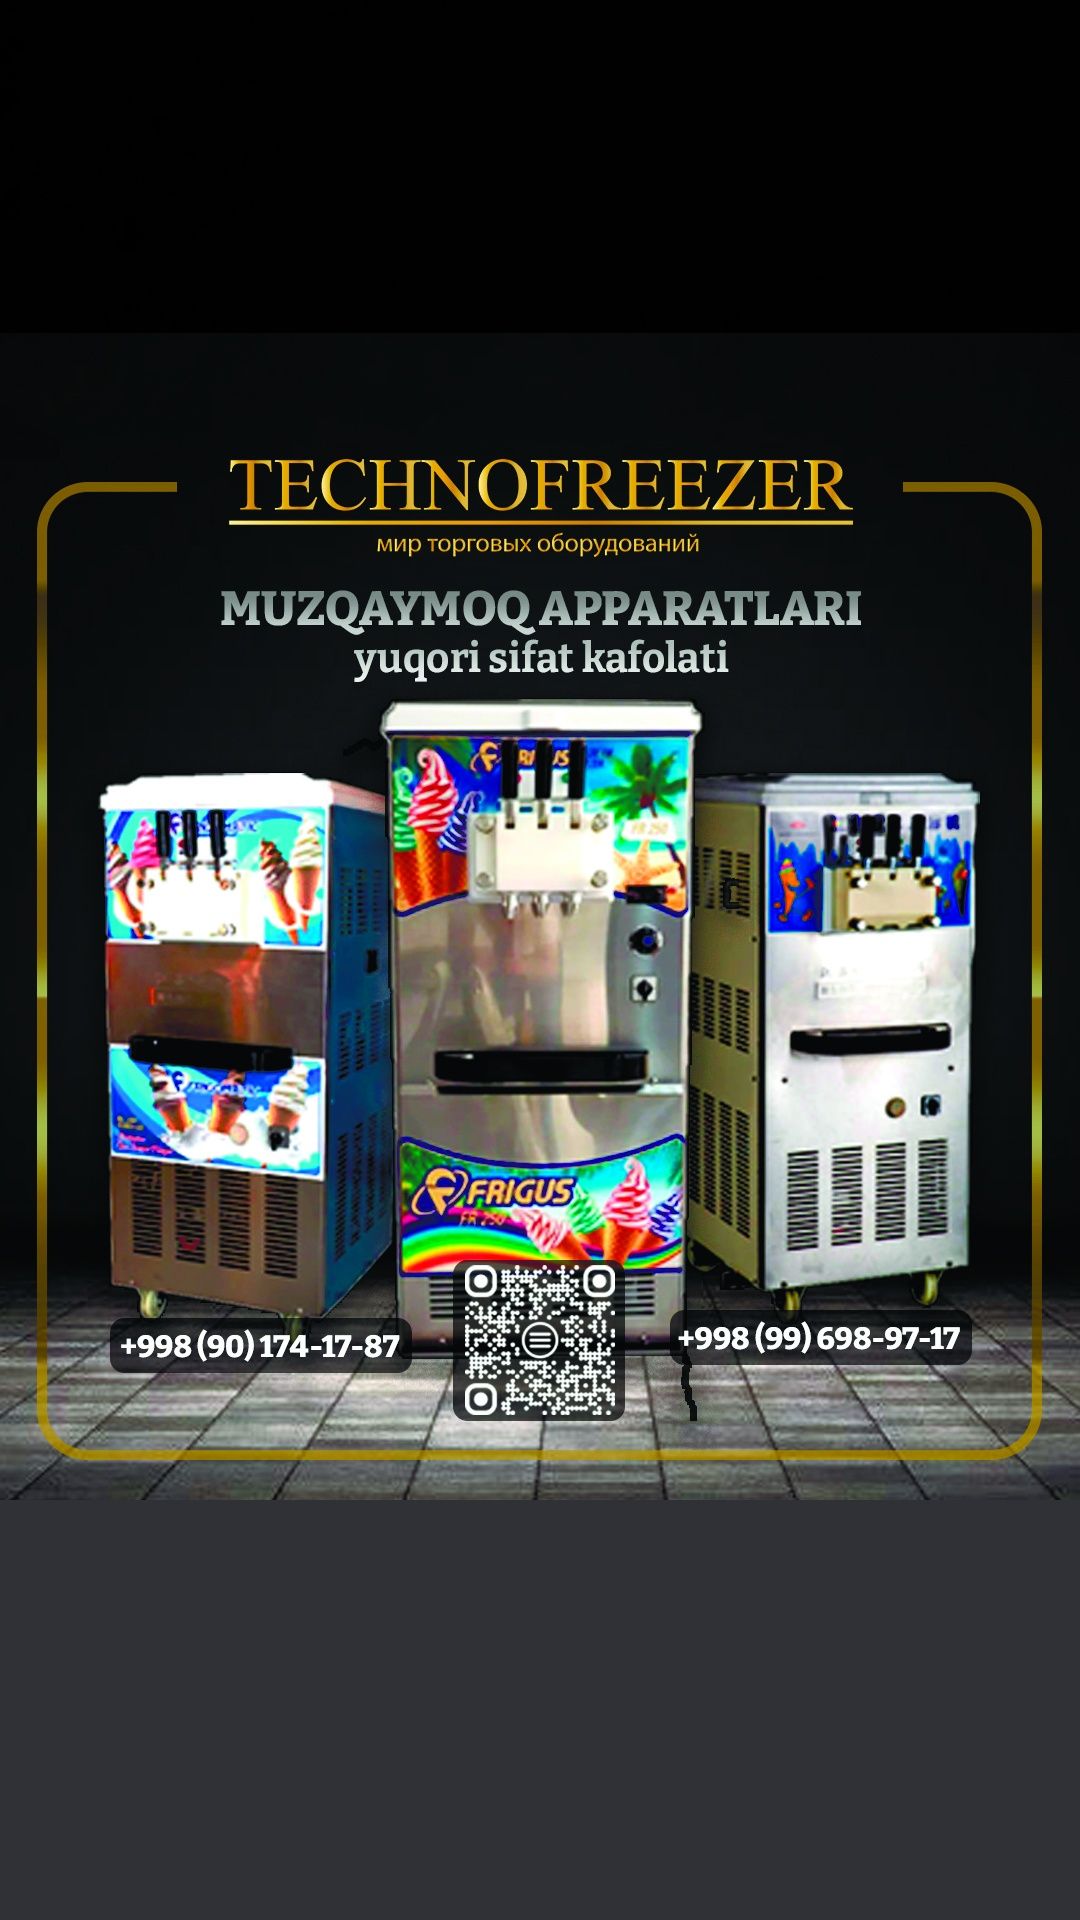 Technofreezer Frigomatic Frigomat Frigamat Frezr Freezer